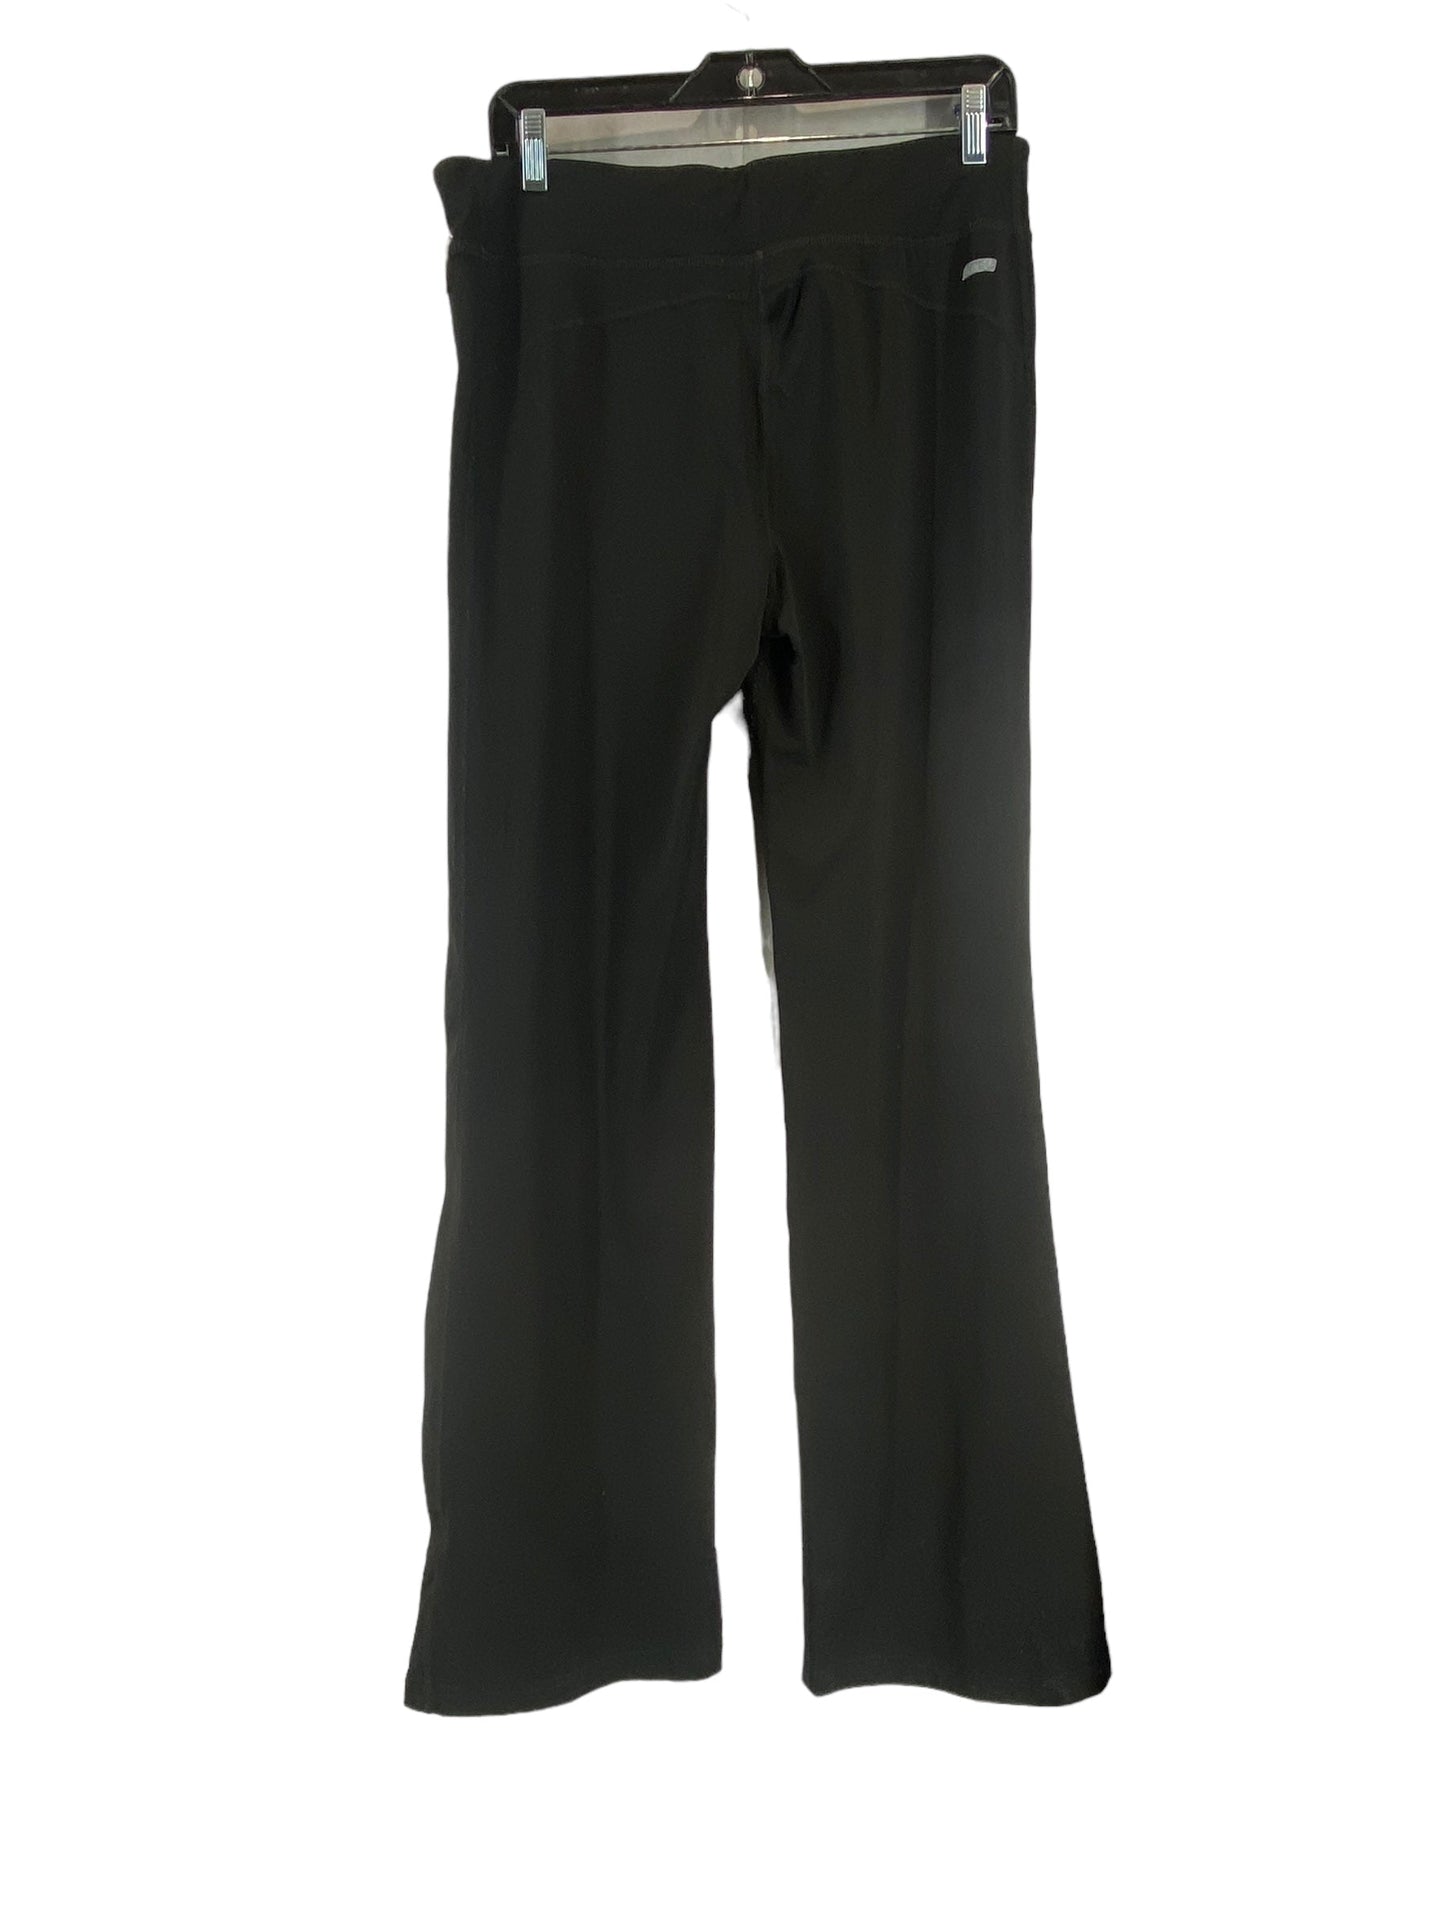 Black Athletic Pants Danskin, Size L